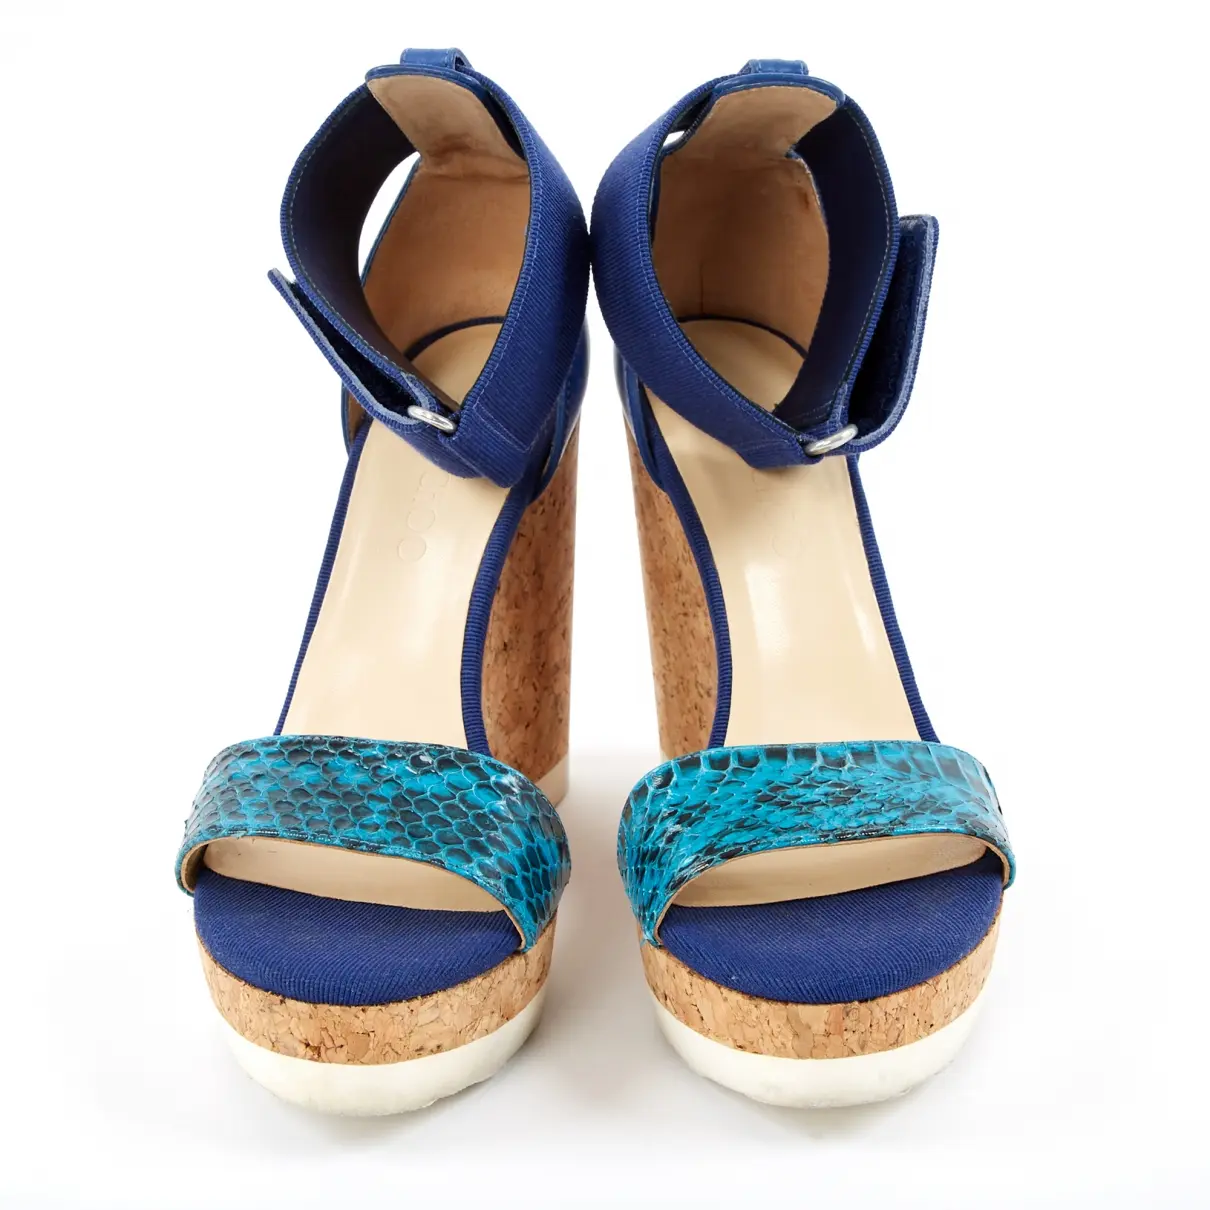 Buy Jimmy Choo Python heels online